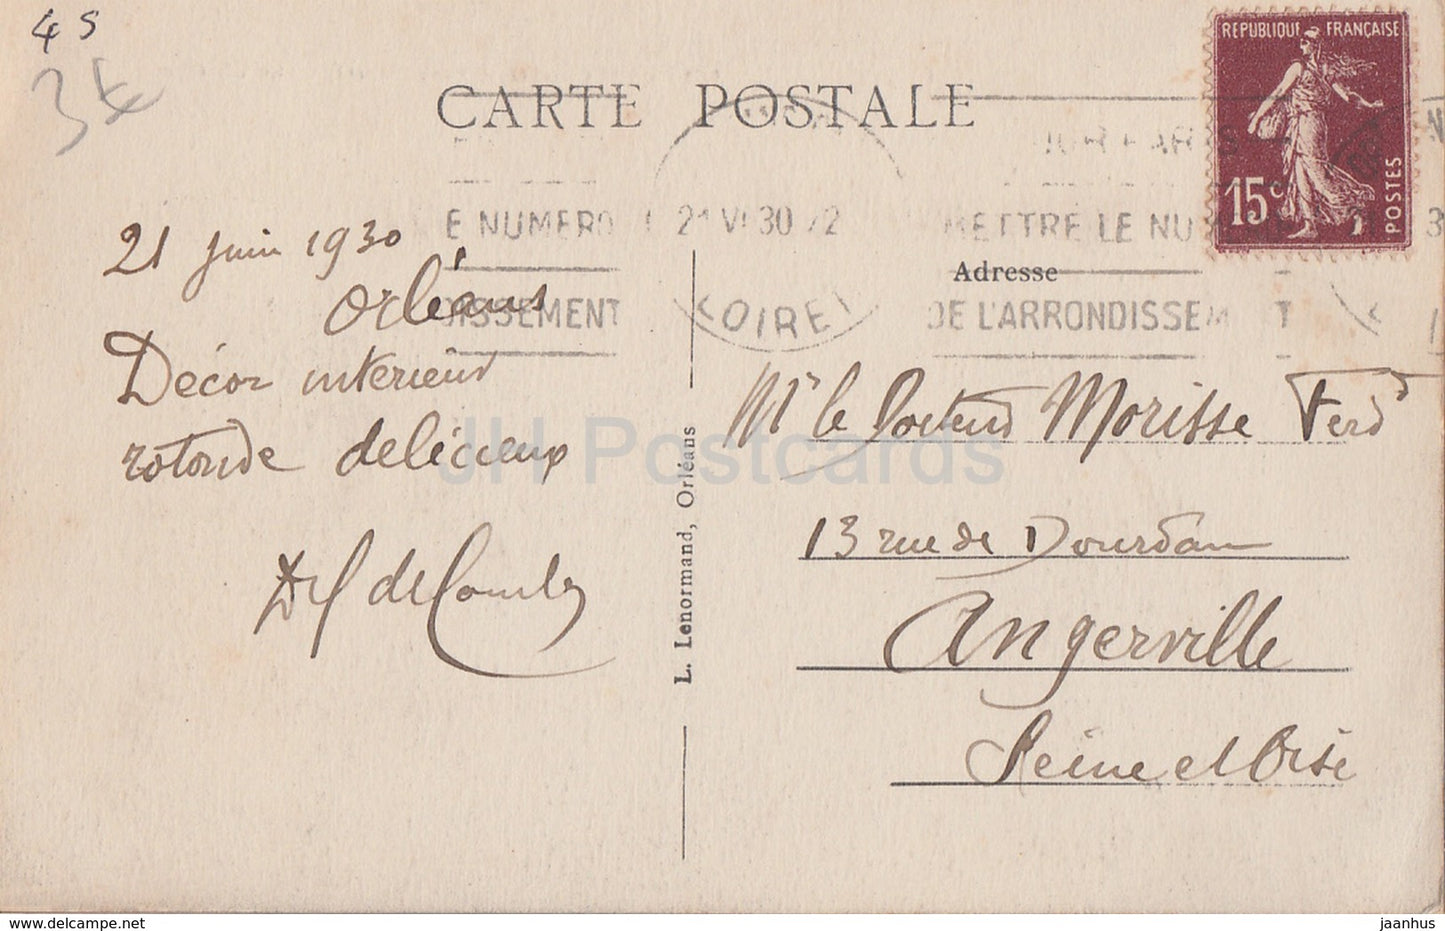 Chateauneuf sur Loire - Le Chateau - castle - 147 - old postcard - 1930 - France - used